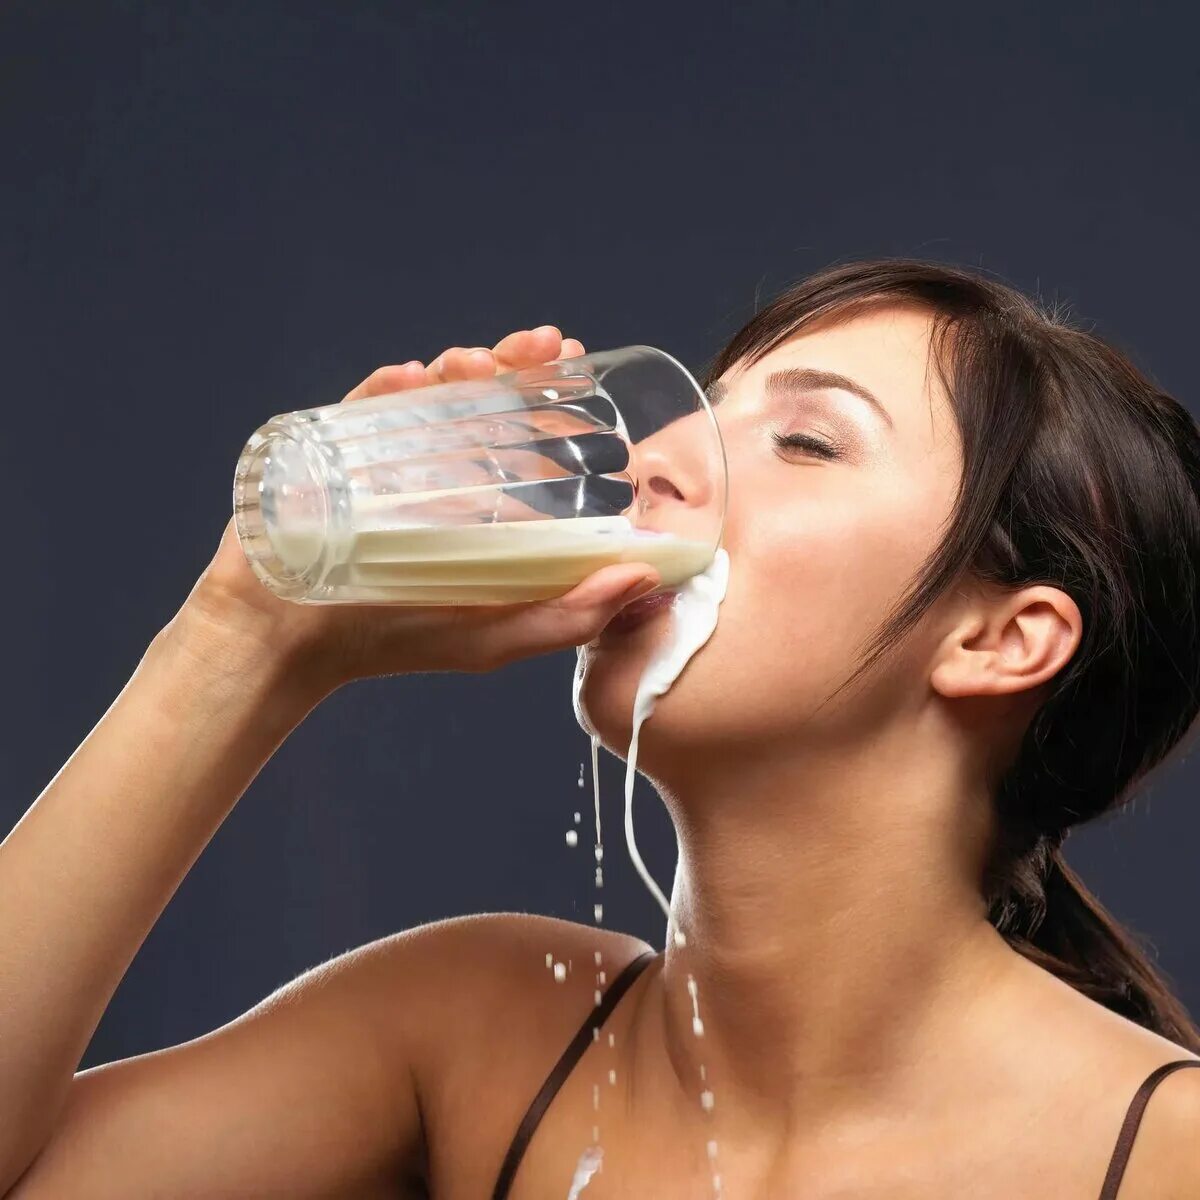 Девушка пьет. Девушка пьет молоко. Молочная грудь. Жевушка пьёт своё молоко.